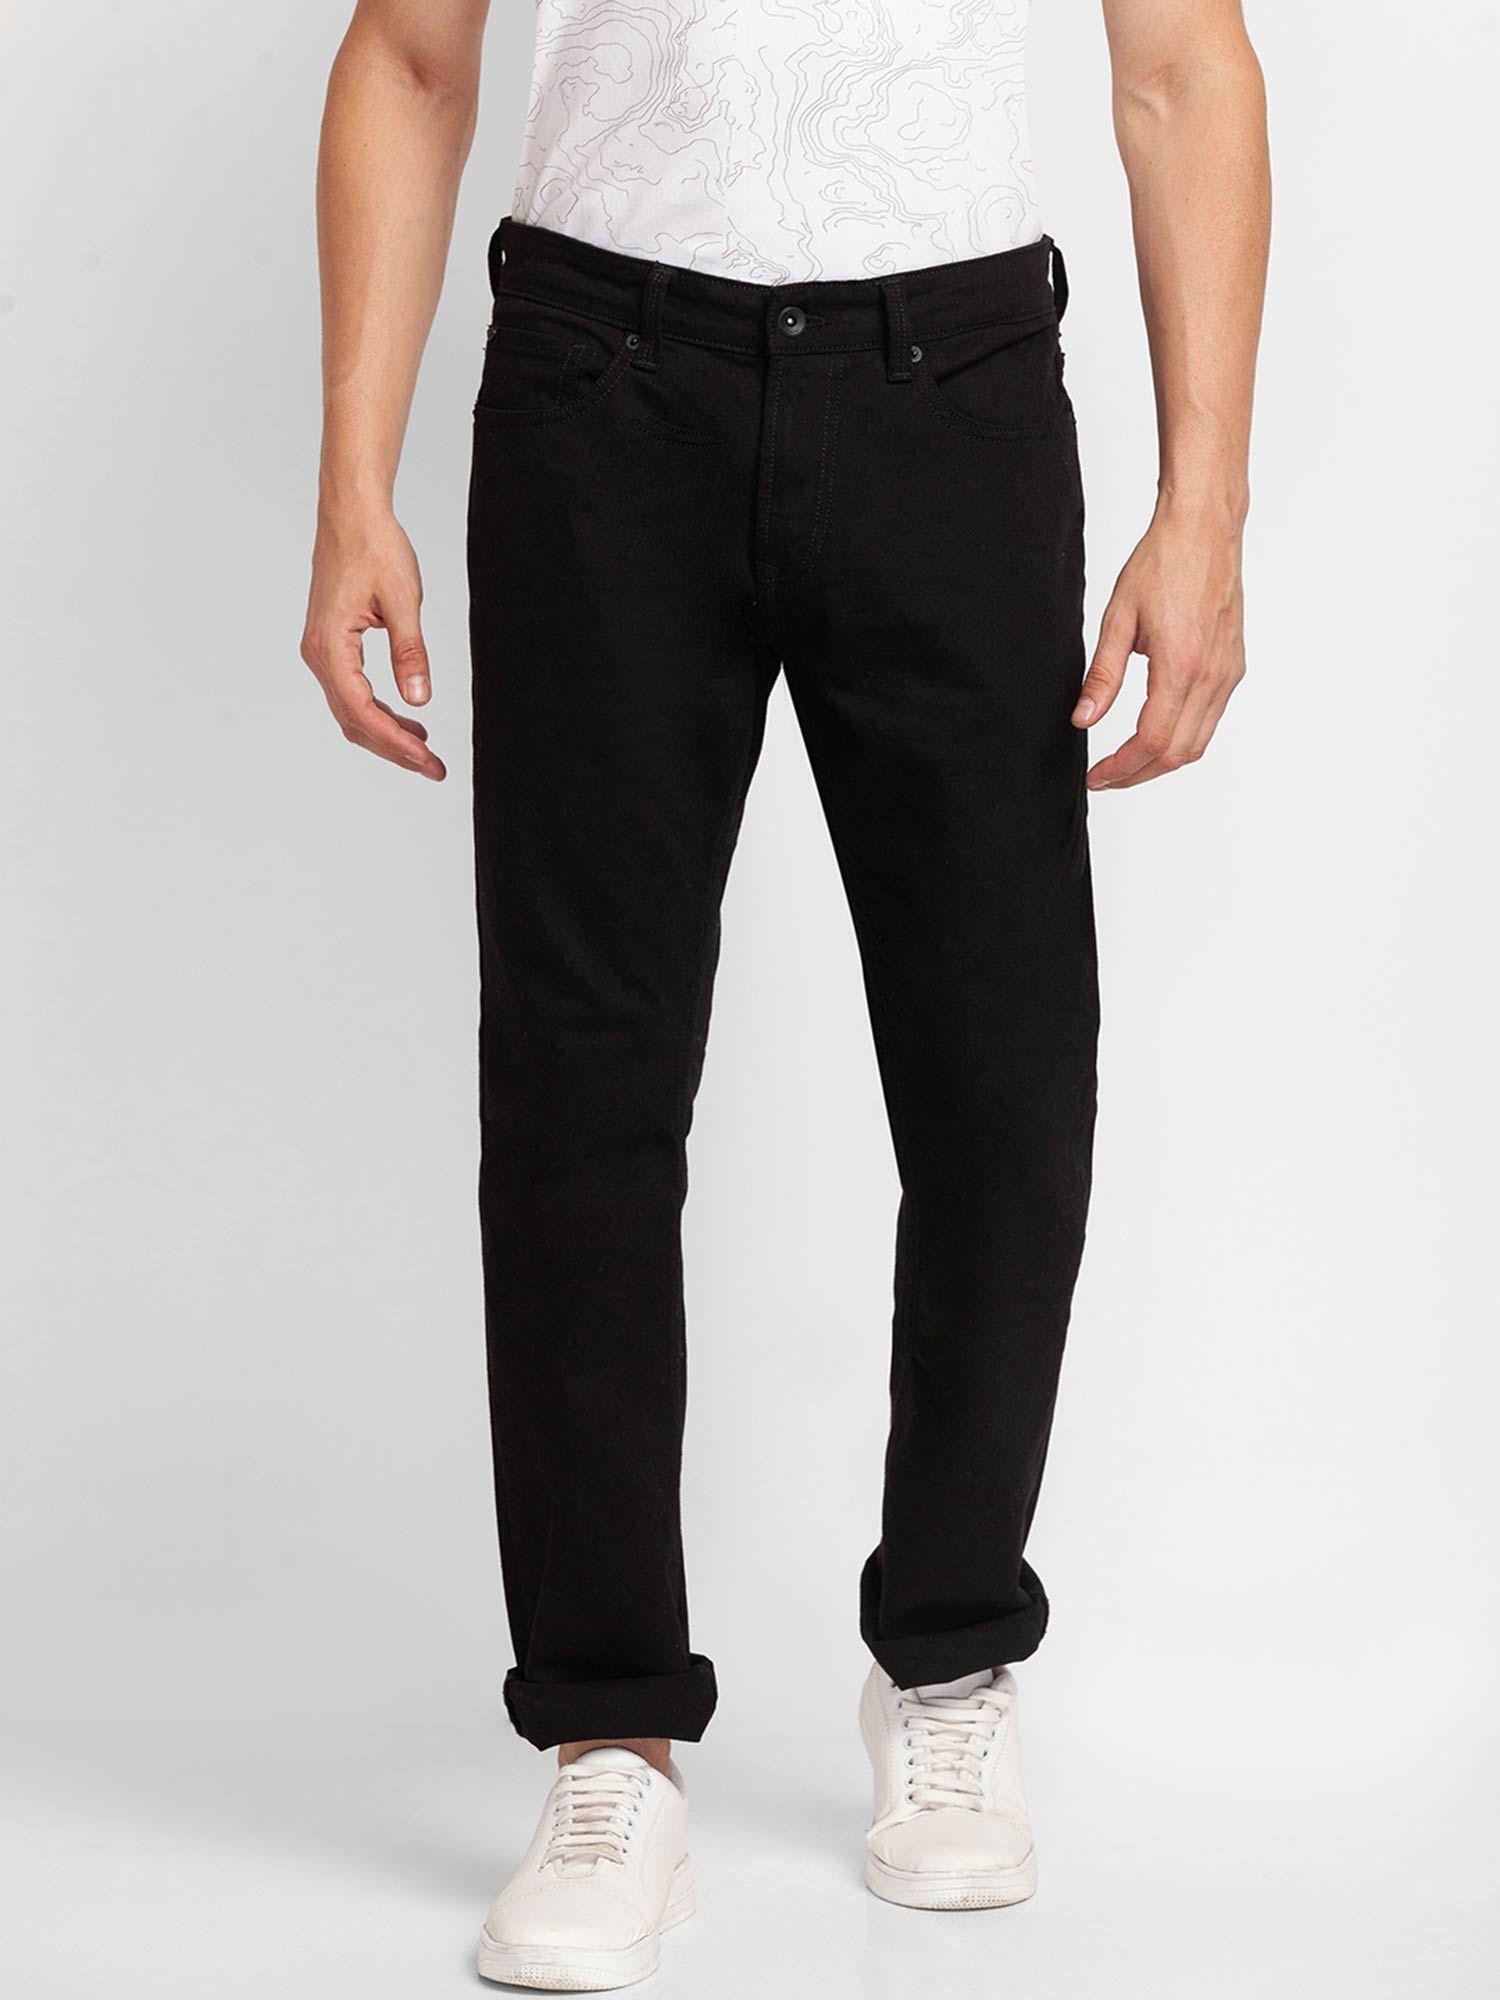 black cotton comfort fit straight length jeans for men (ricardo)